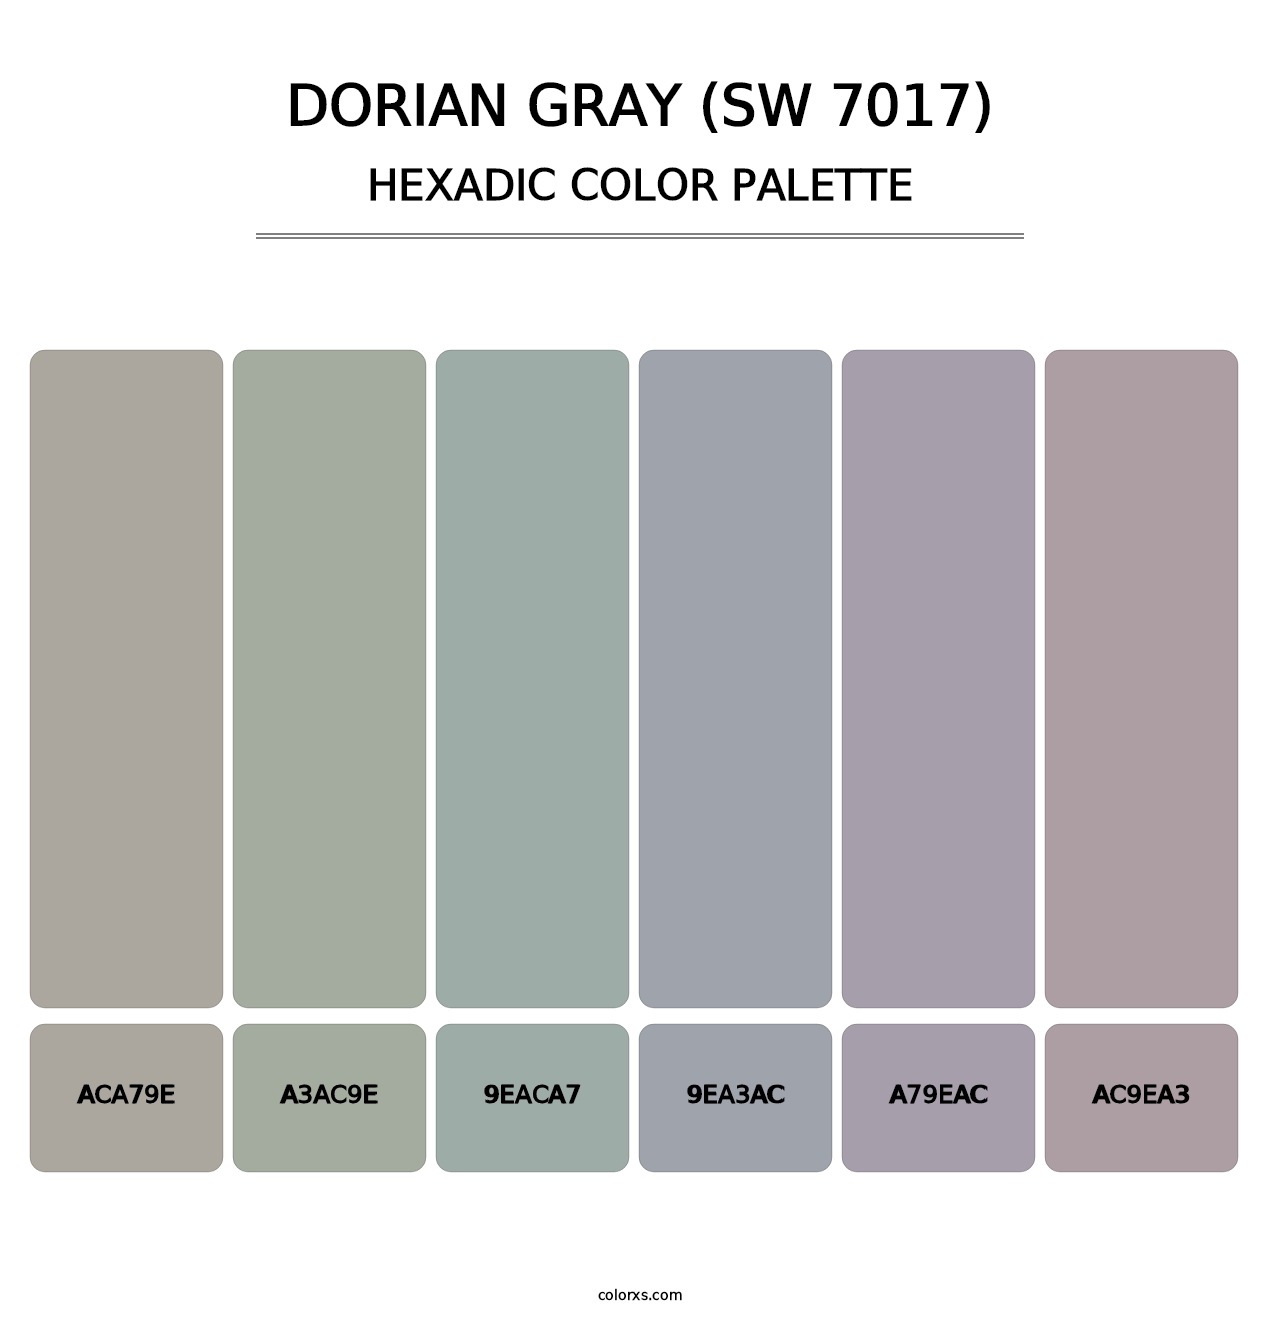 Dorian Gray (SW 7017) - Hexadic Color Palette